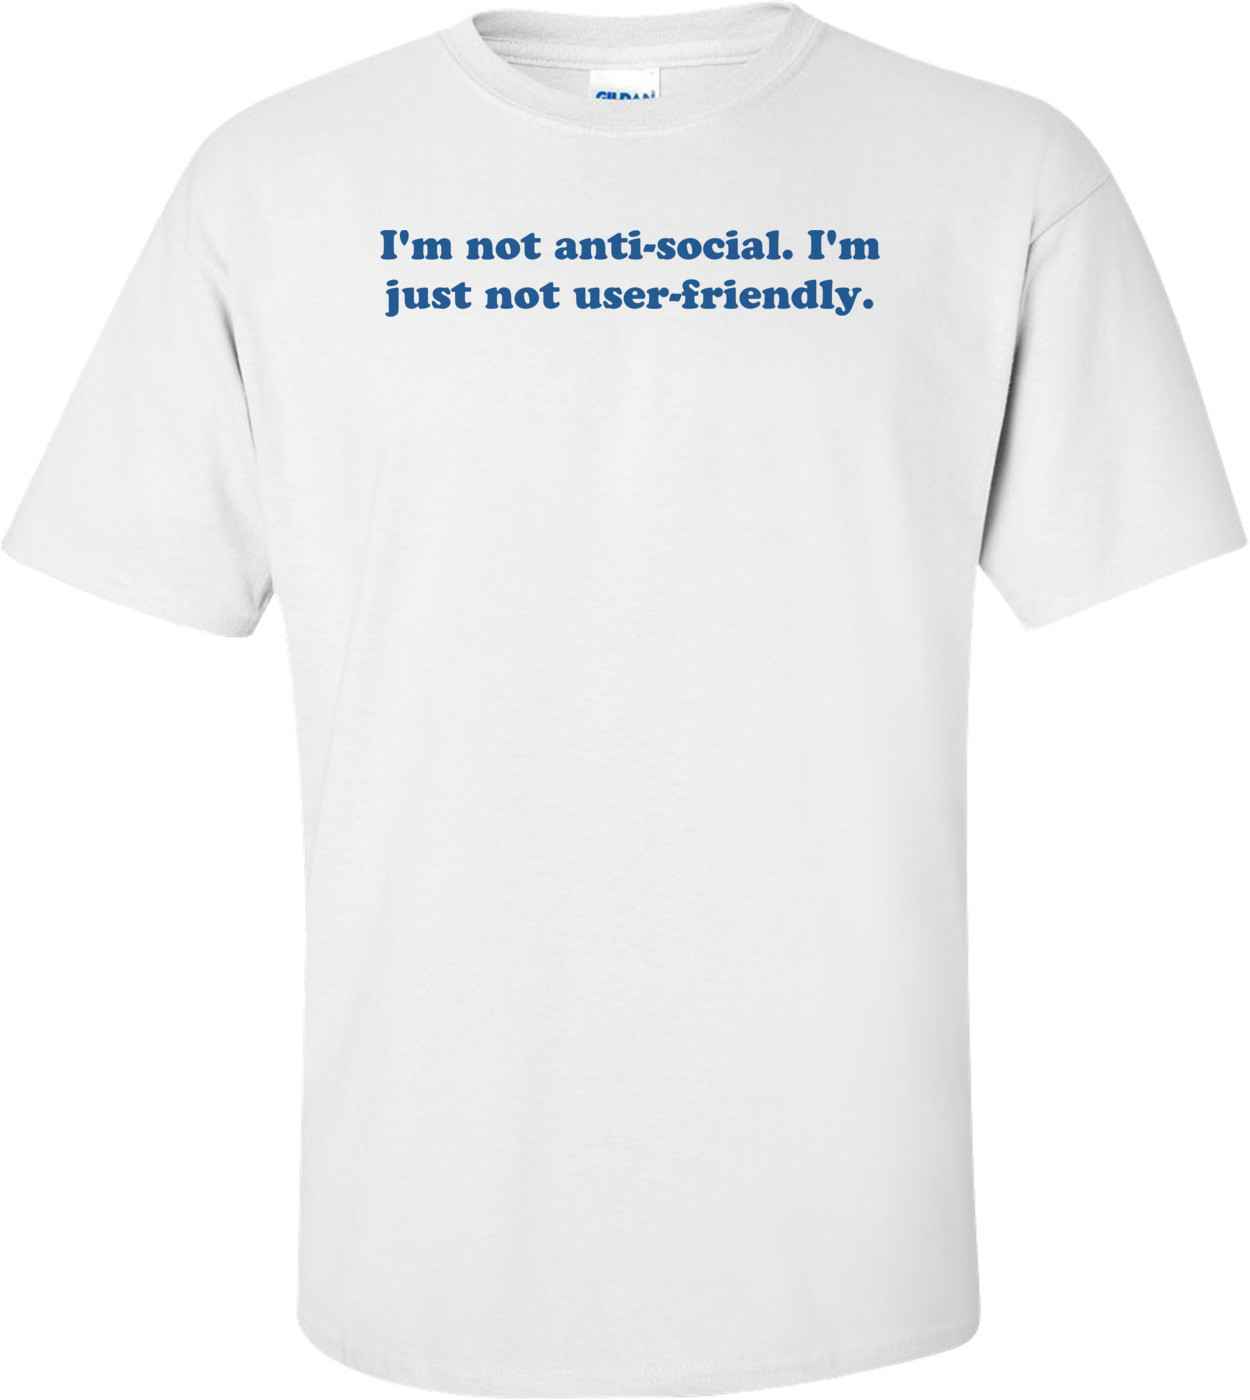 I'm not anti-social. I'm just not user-friendly. Shirt